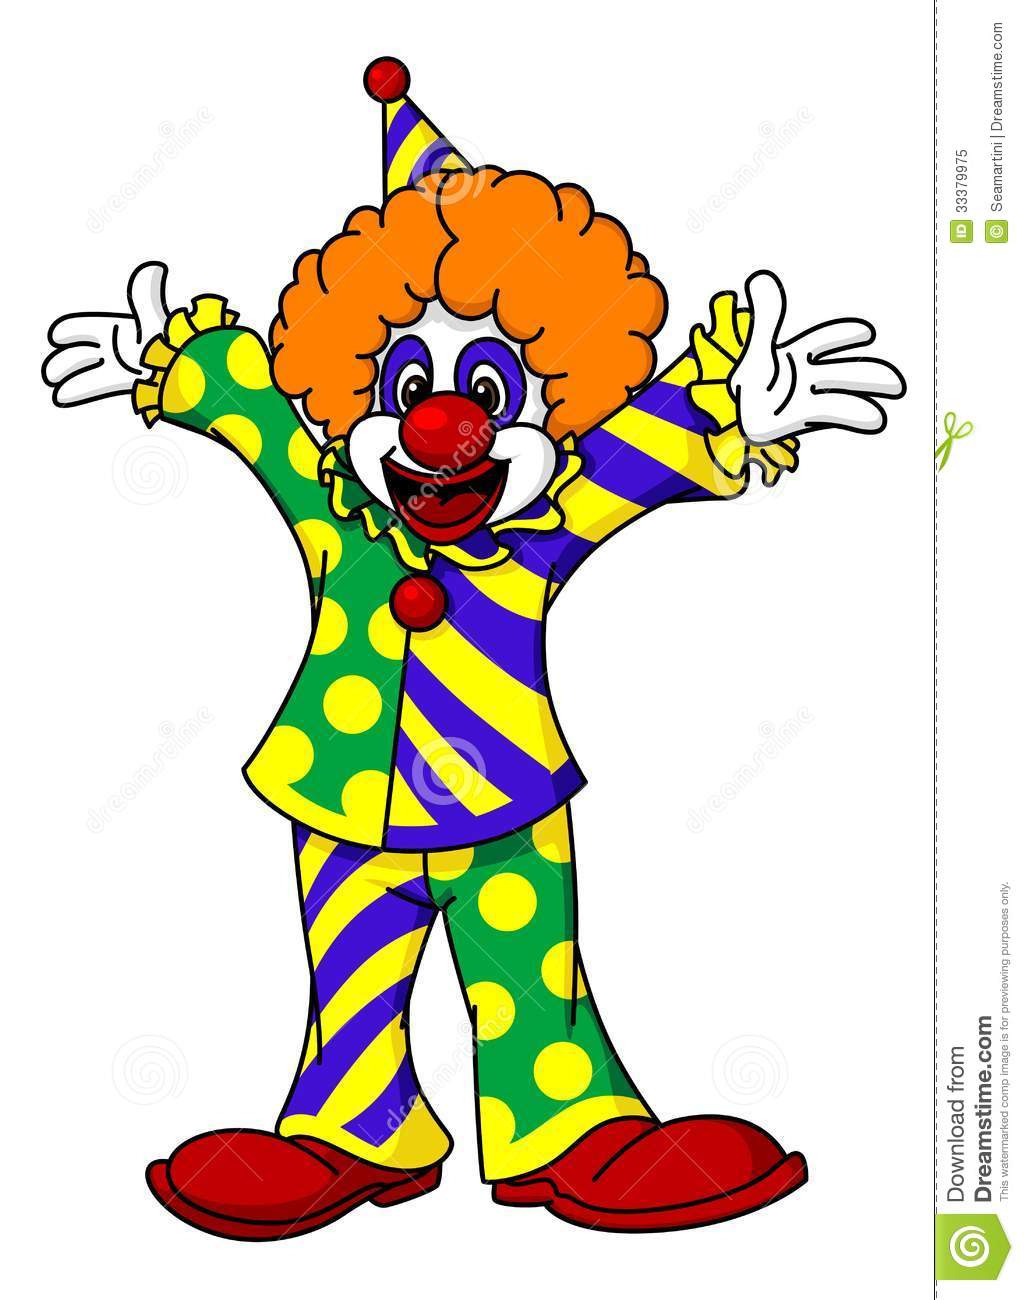 Circus Clown Royalty Free Stock Photo   Image  33379975